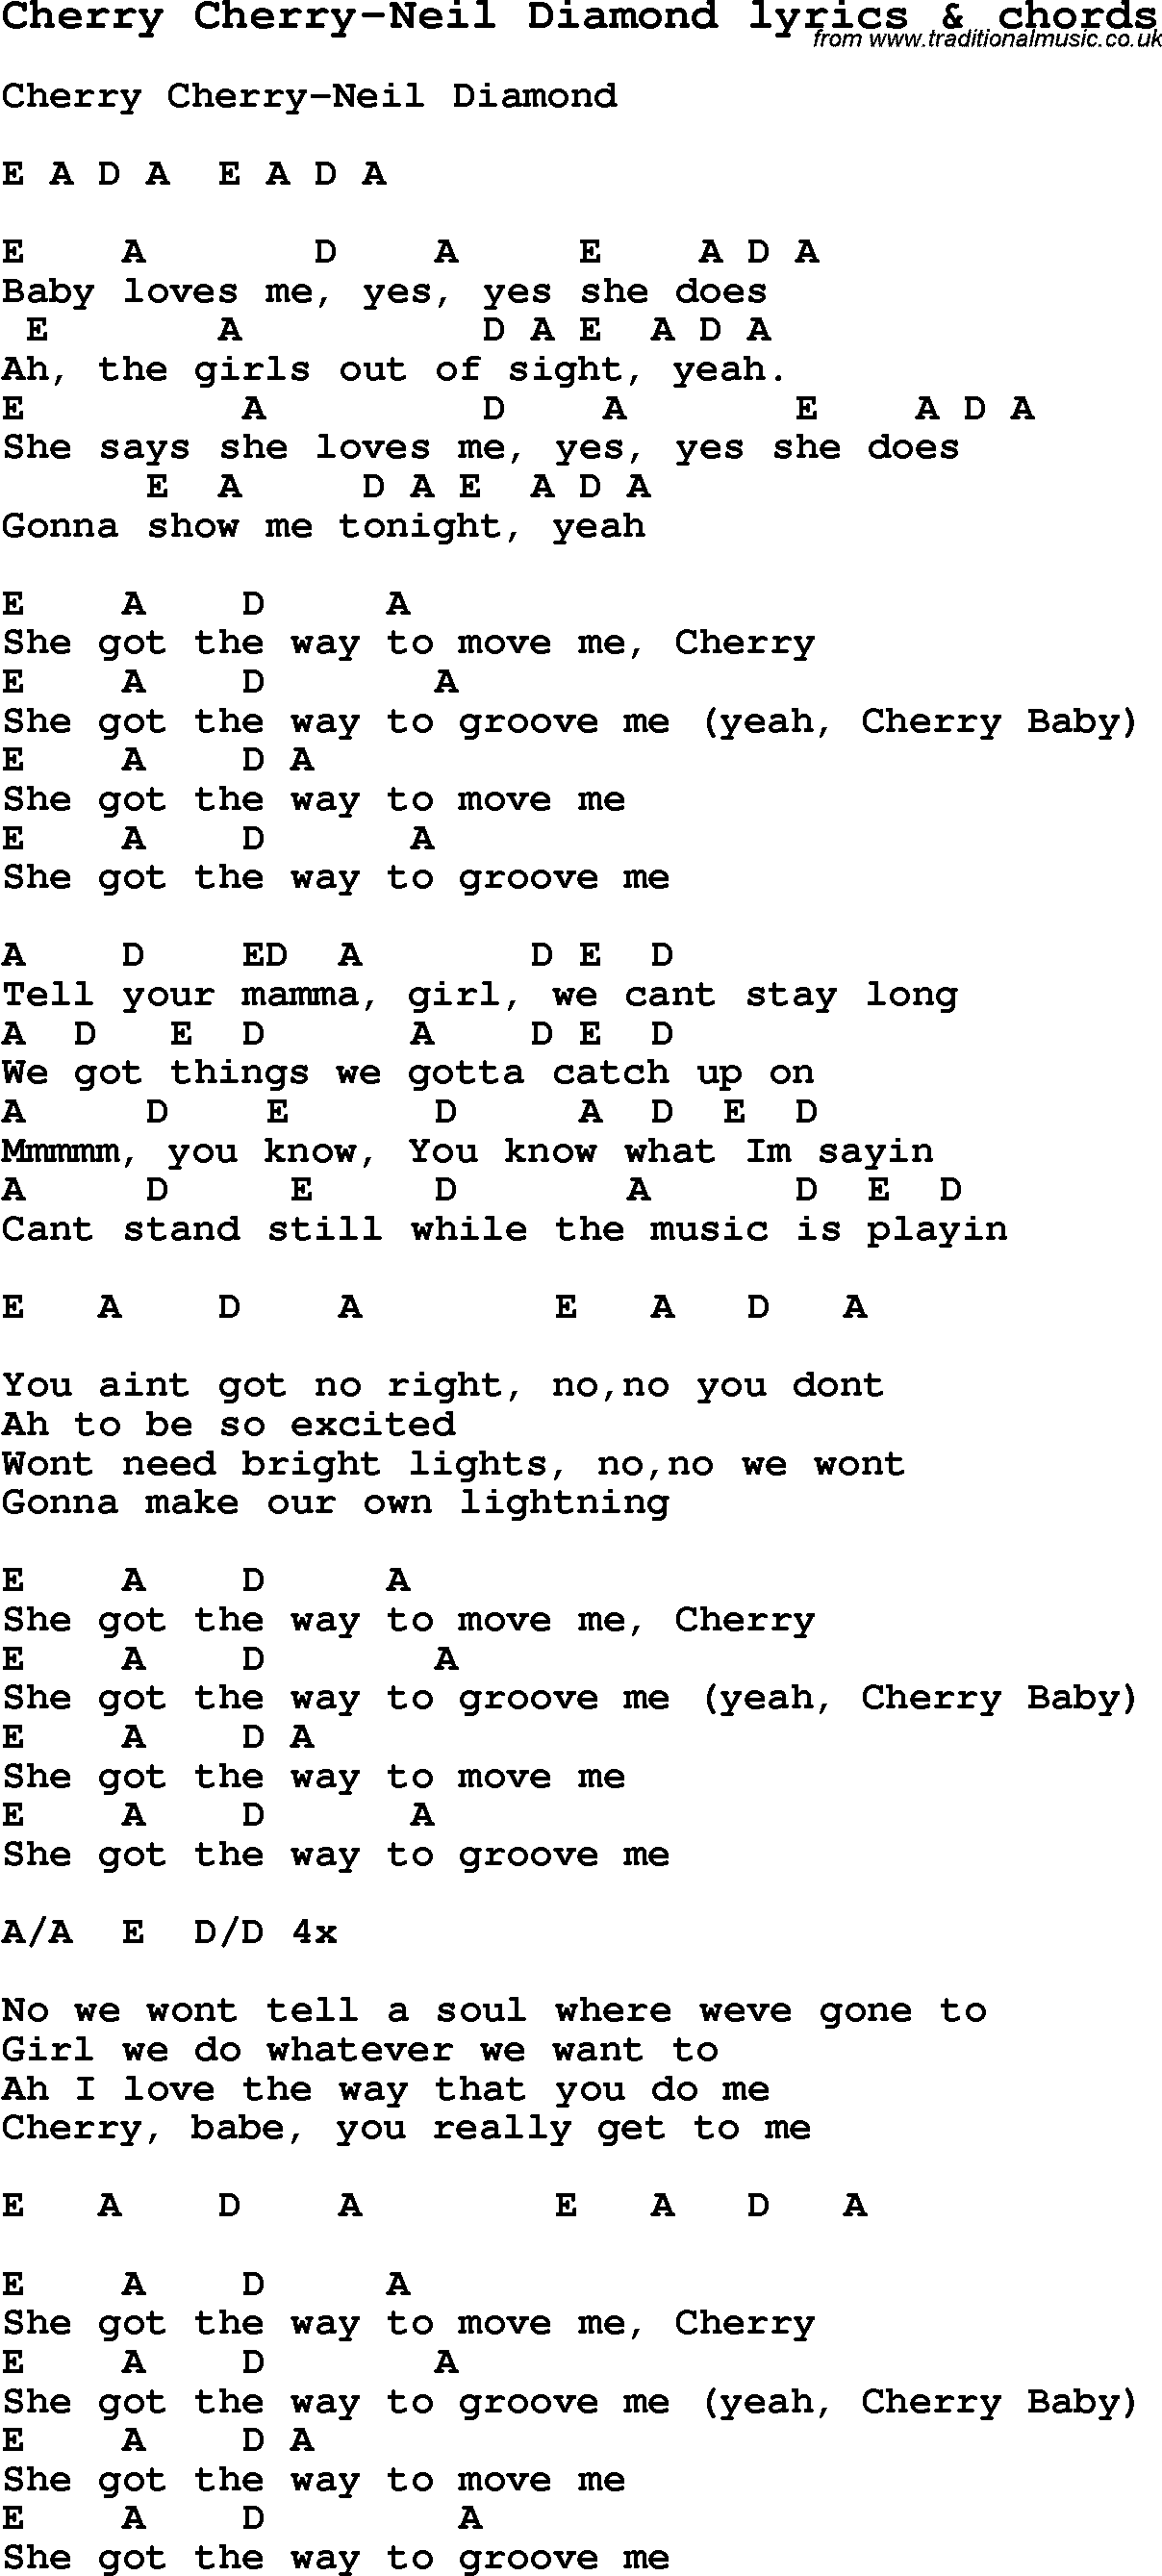 Love Song Lyrics for: Cherry Cherry-Neil Diamond with chords for Ukulele, Guitar Banjo etc.